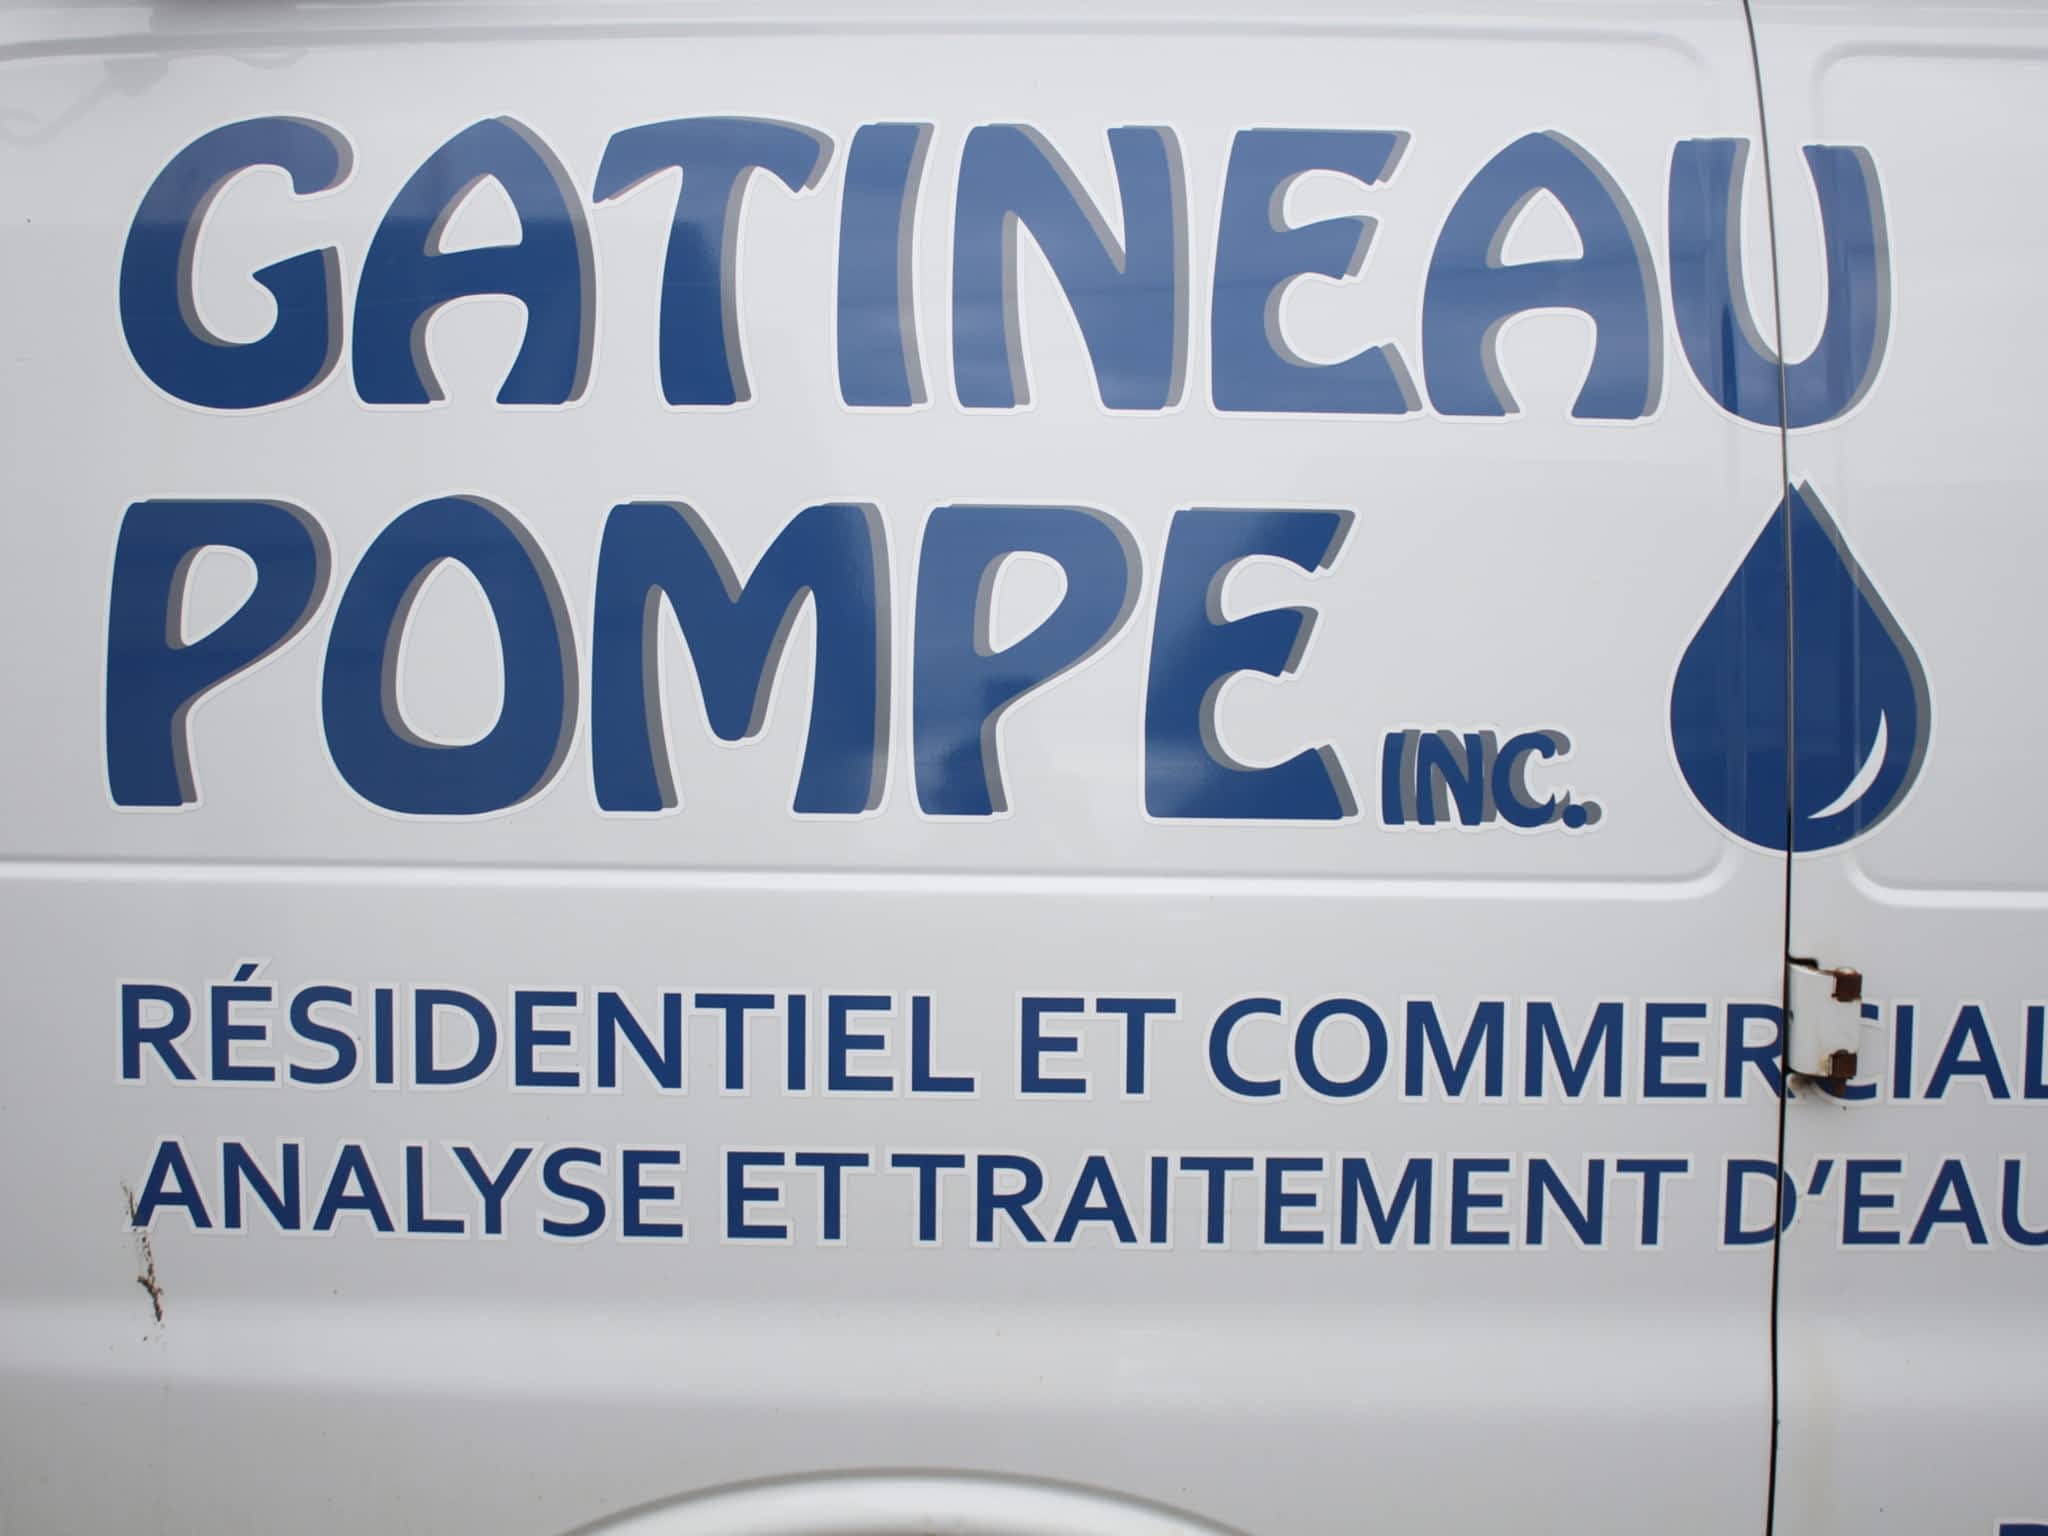 photo Gatineau Pompe Inc